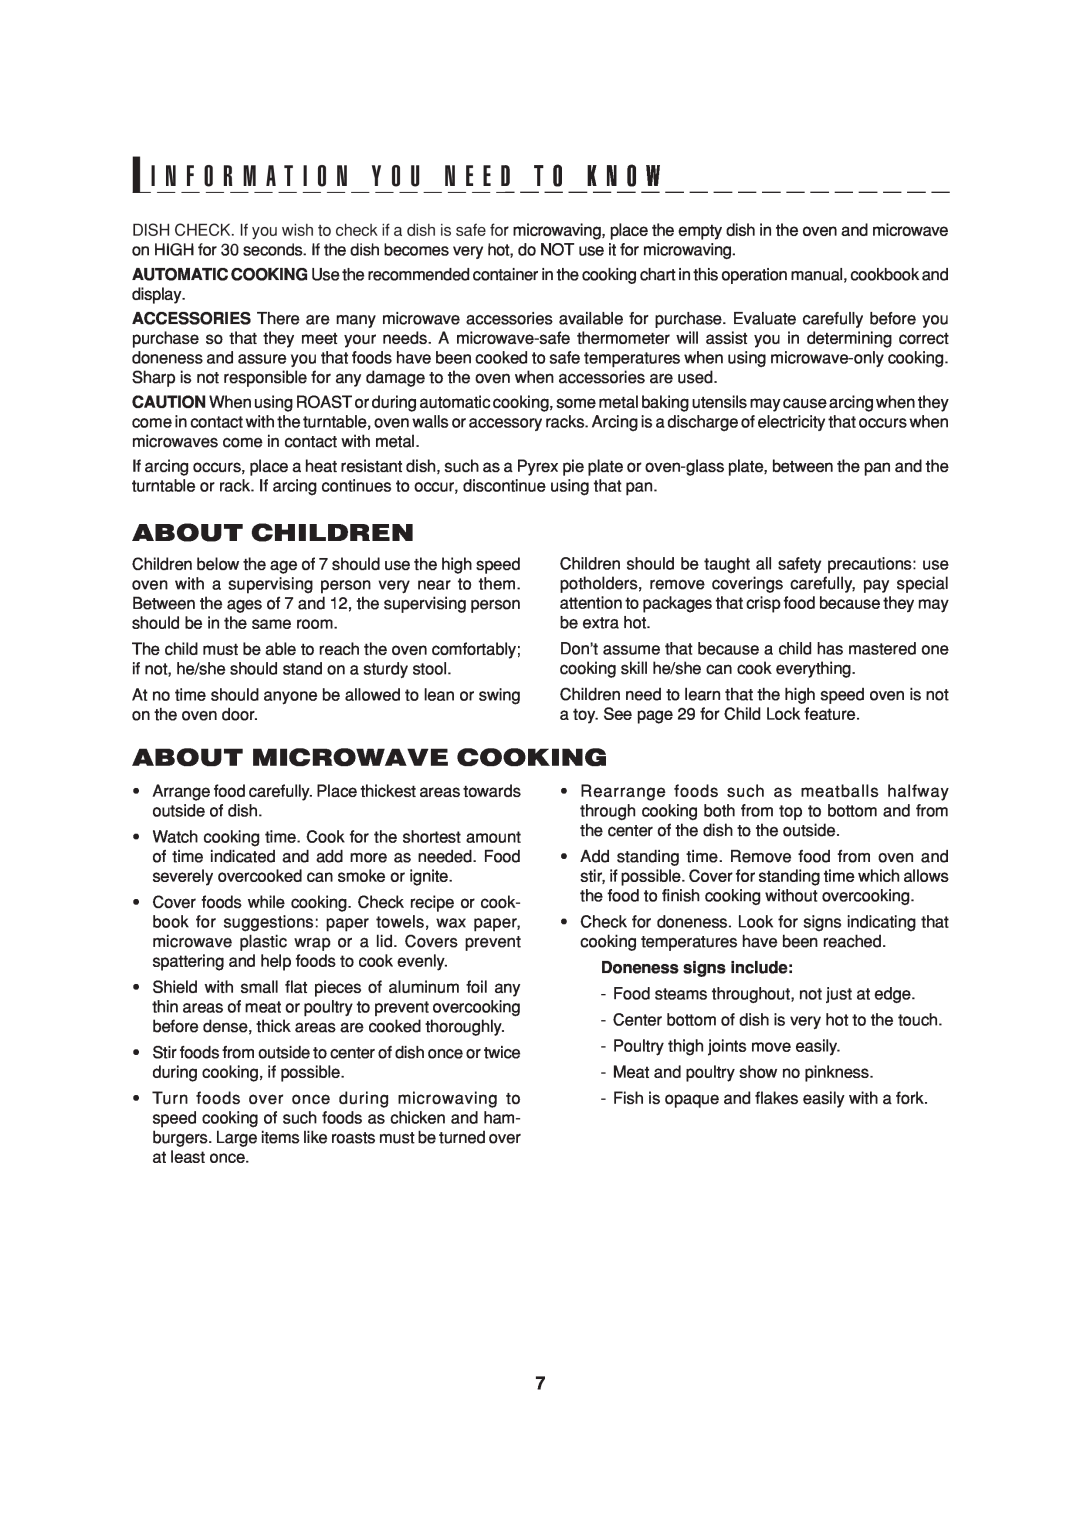 Sharp R-90GC operation manual About Children, About Microwave Cooking, I N F O R M A T I O N Y O U N E E D T O K N O W 